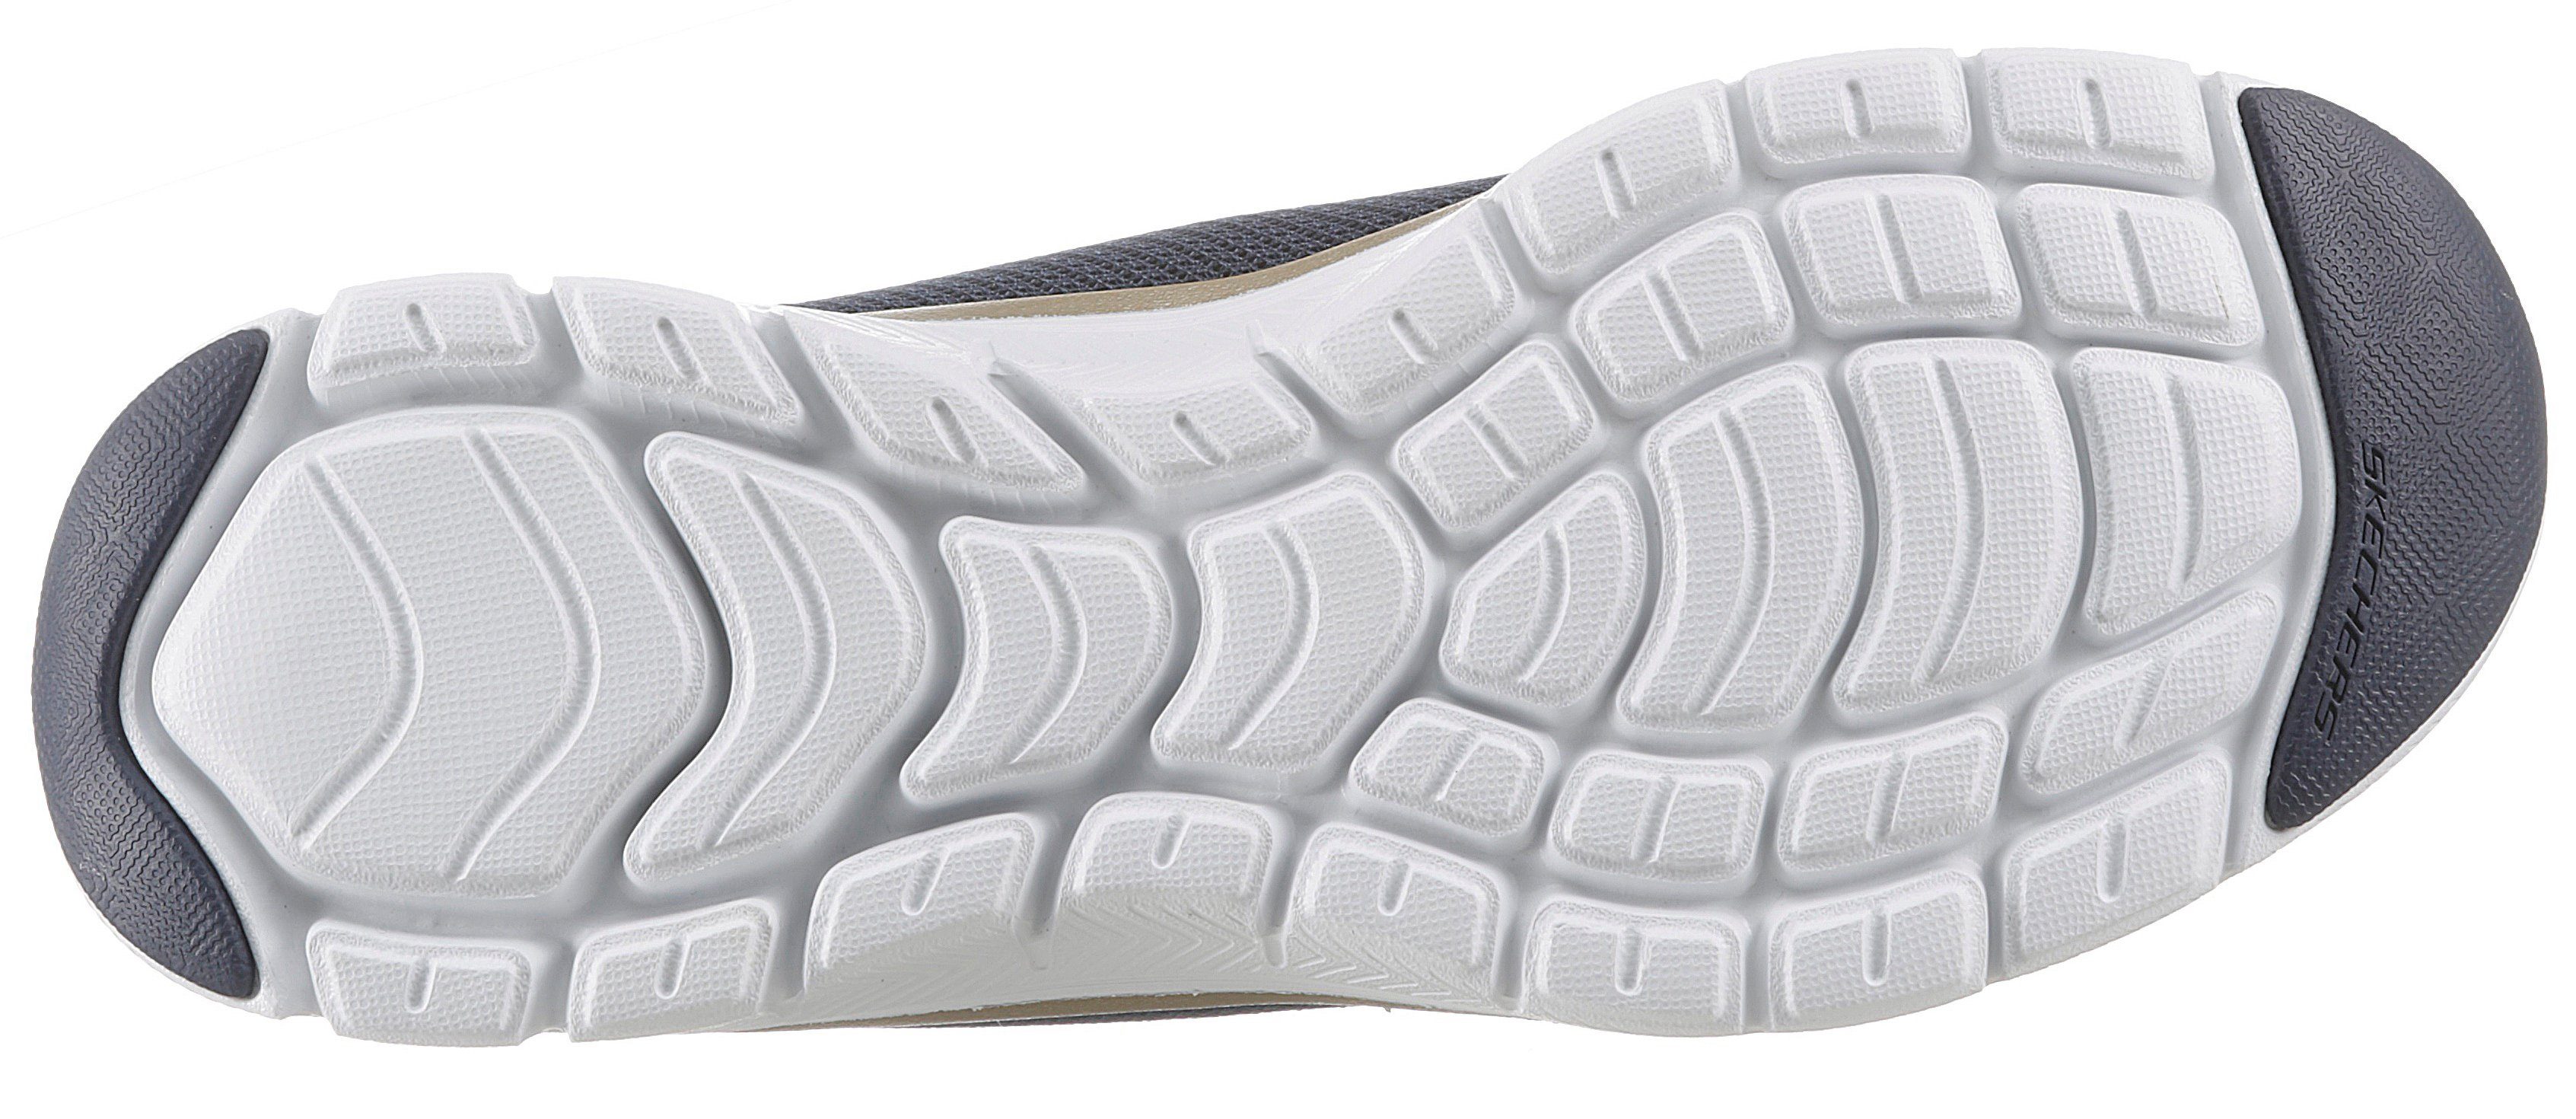 Skechers BRILLINAT Memory 4.0 Foam mit Sneaker FLEX APPEAL Air-Cooled Ausstattung navy-goldfarben VIEW